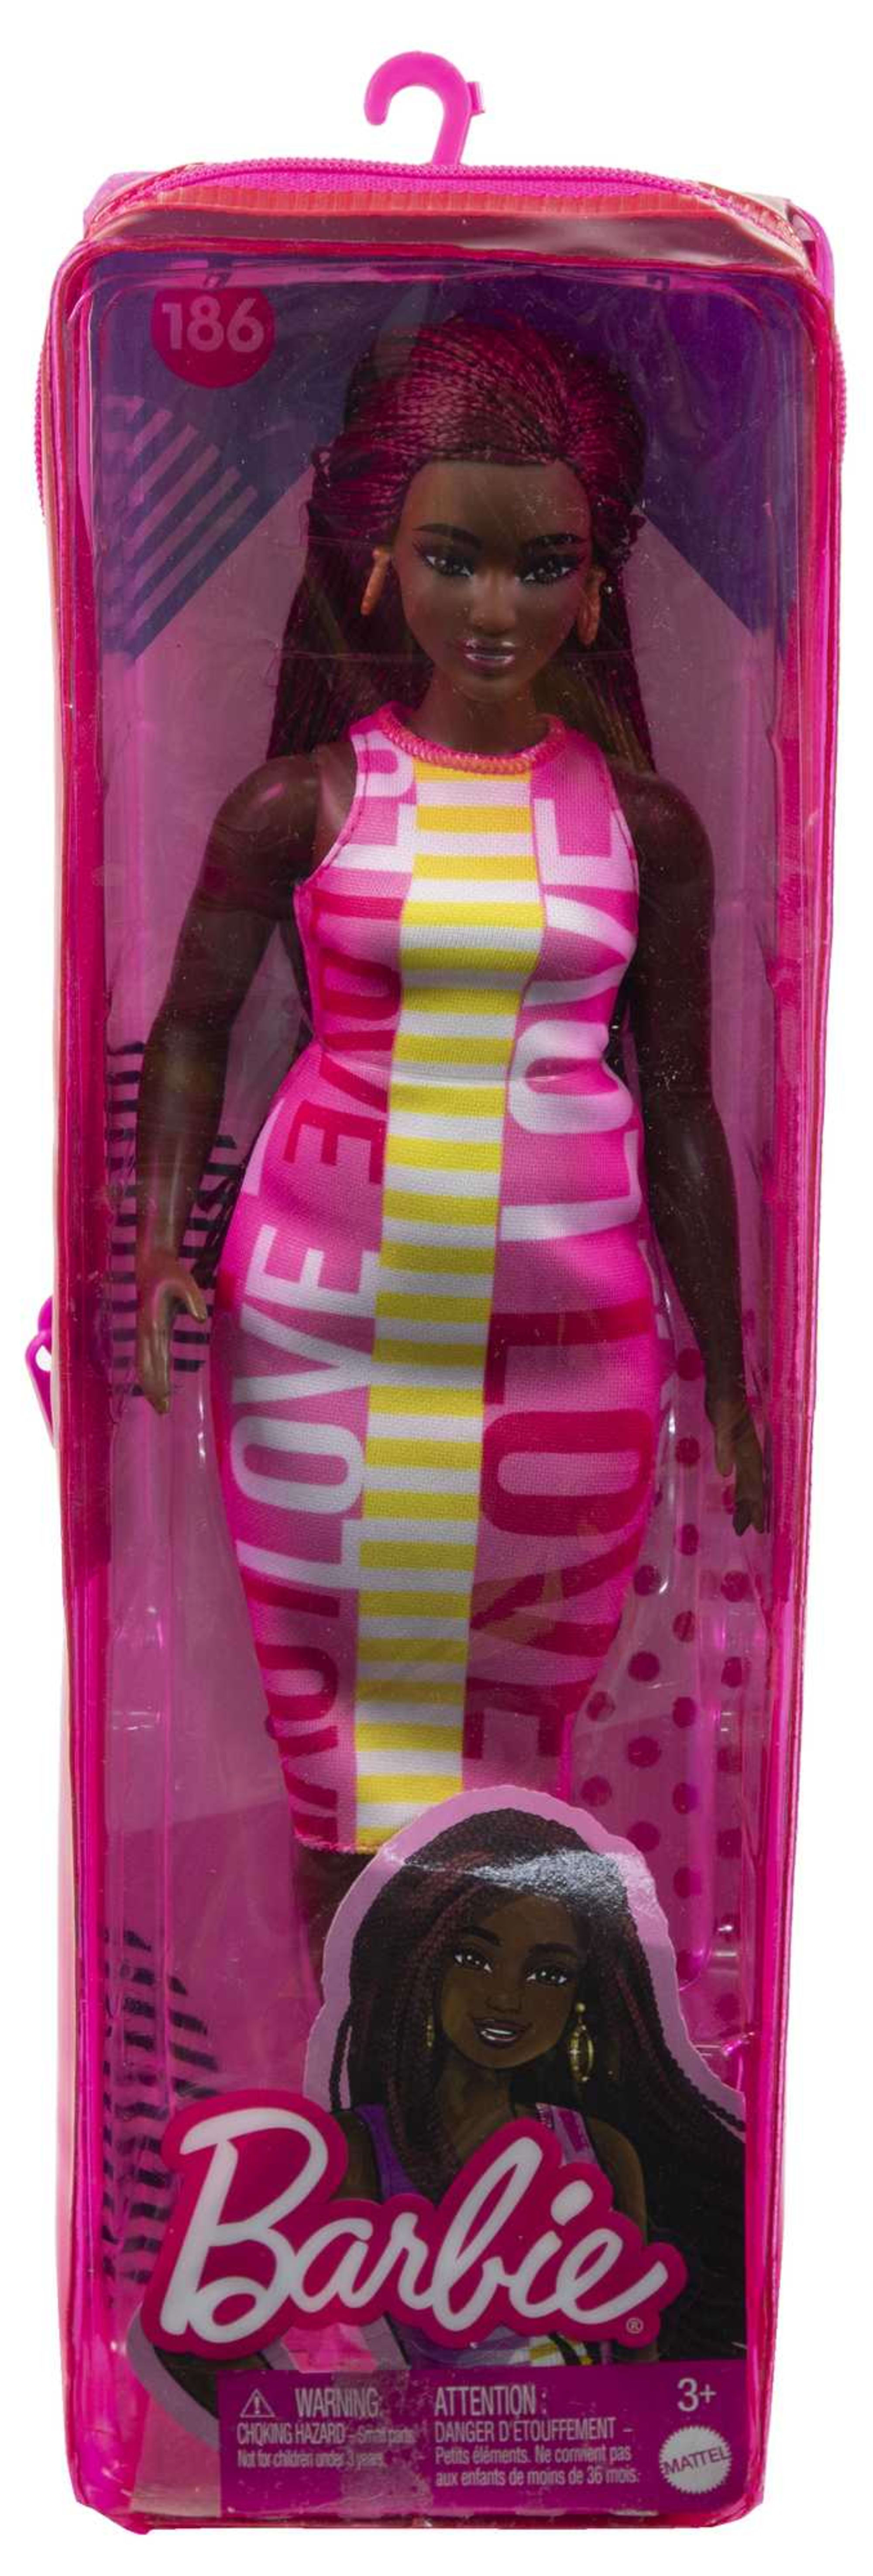 Barbie Fashionistas Doll #186 | Mattel